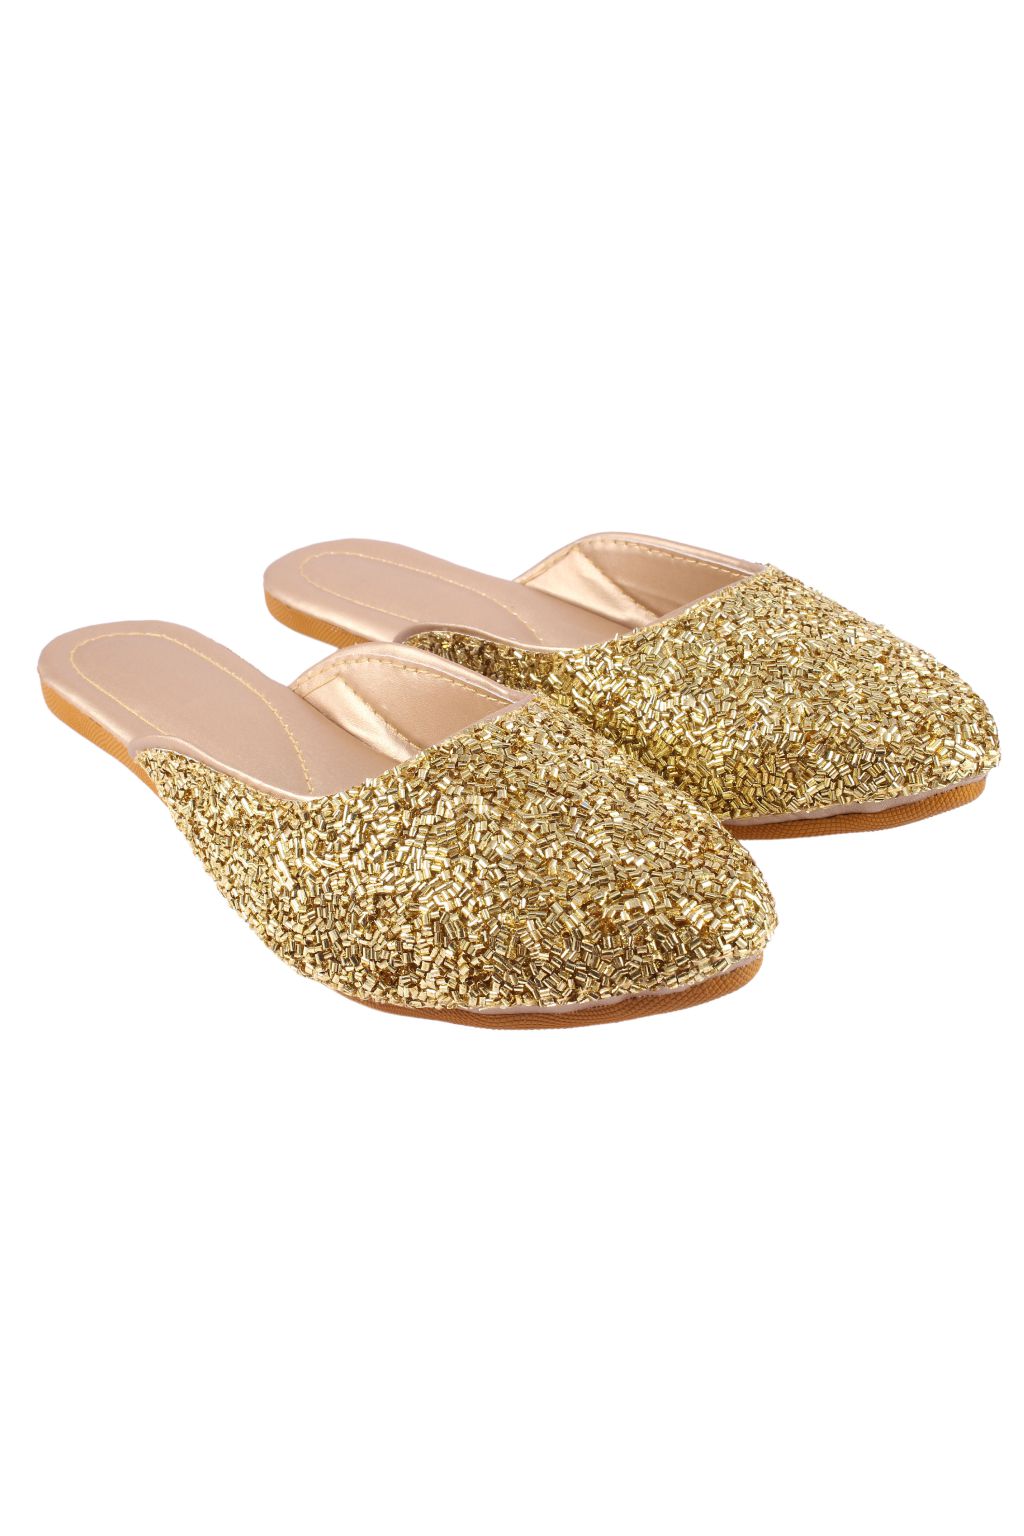 Gold glitter girl shoes | Girls glitter shoes, Girls shoes, Shoes